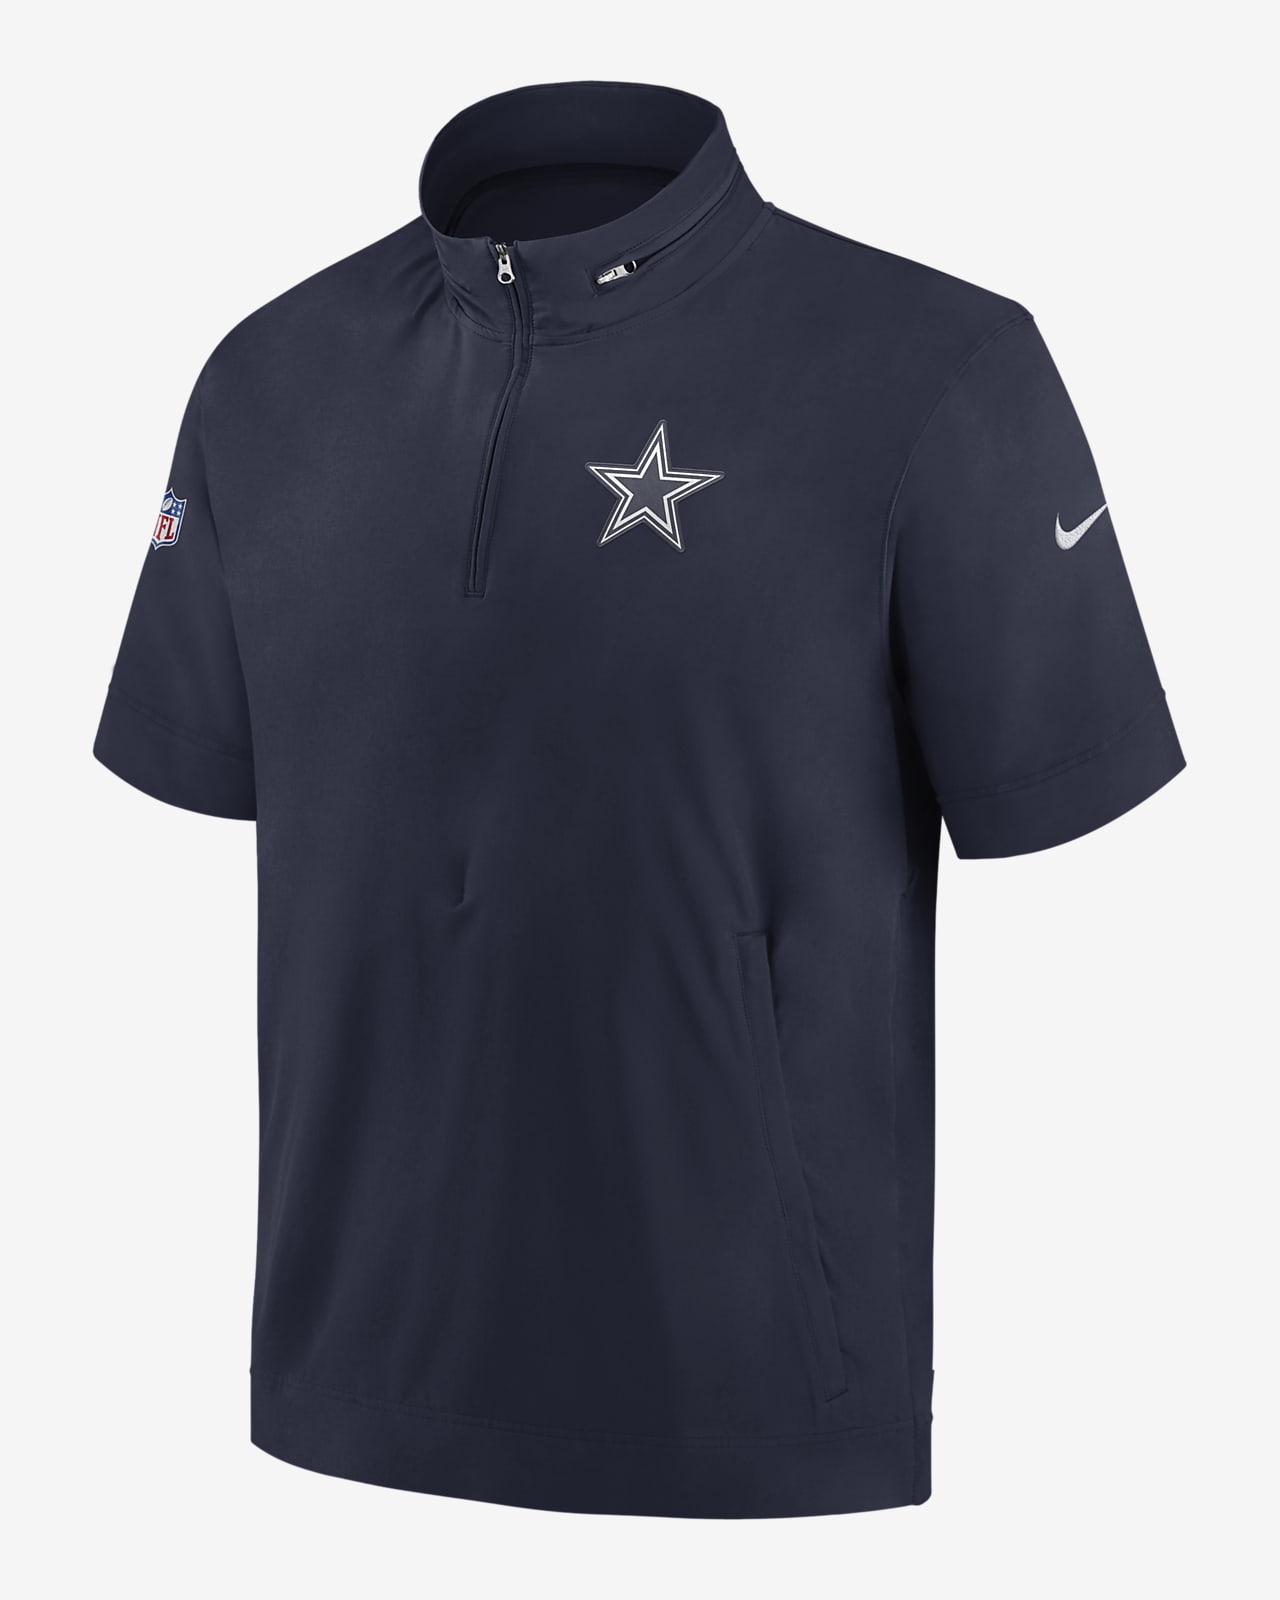  NFL Dallas Cowboys Mens Recruit Varsity Jacket, Charcoal,  Small : Sports & Outdoors